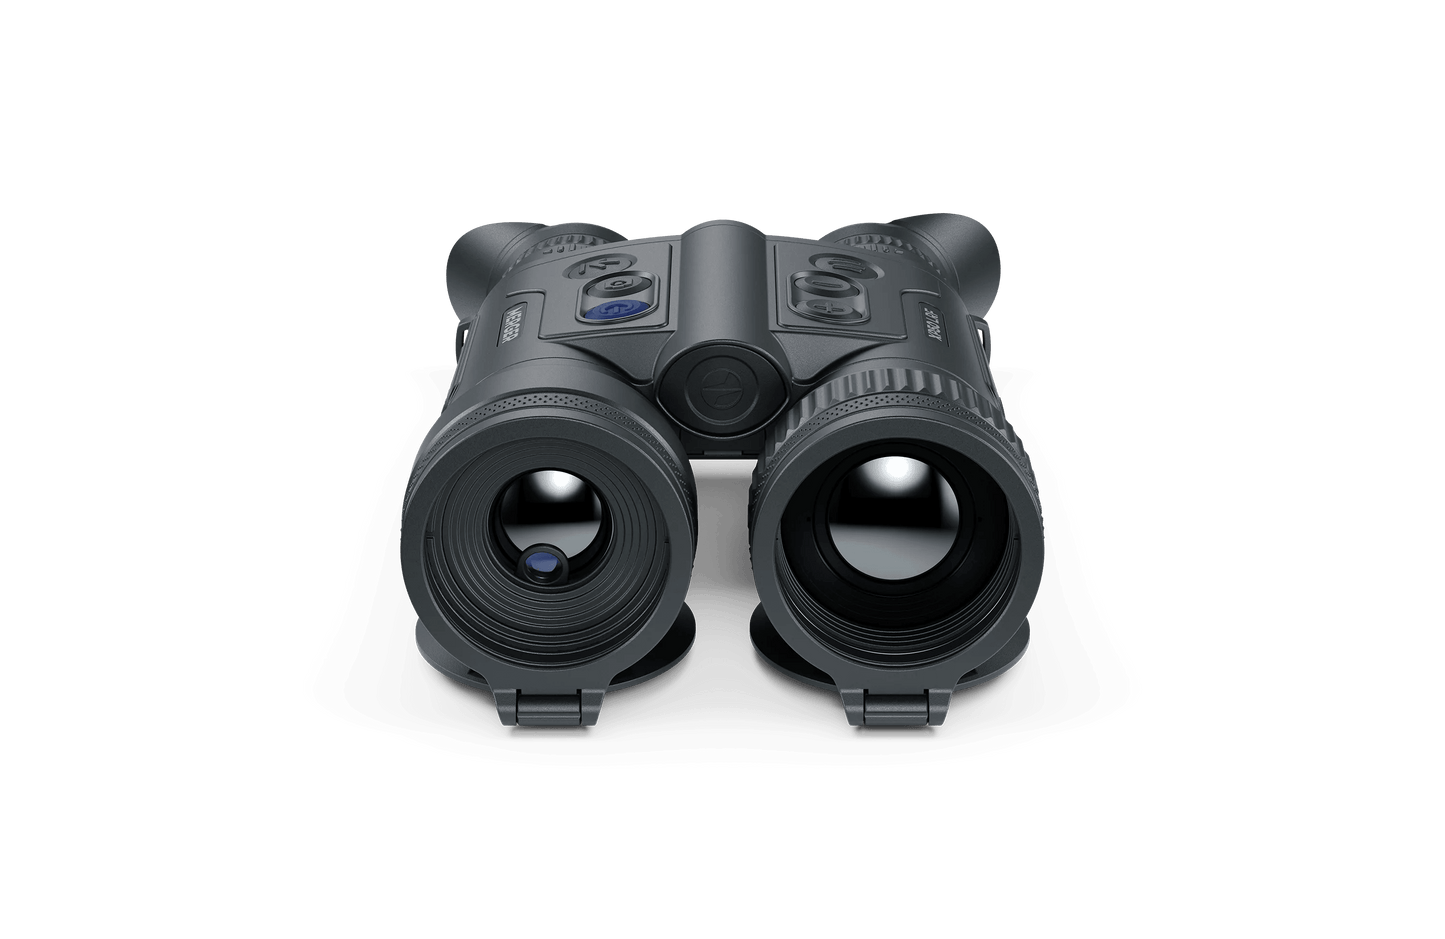 Pulsar Merger LRF XP50 Thermal Binoculars 640 - NVU